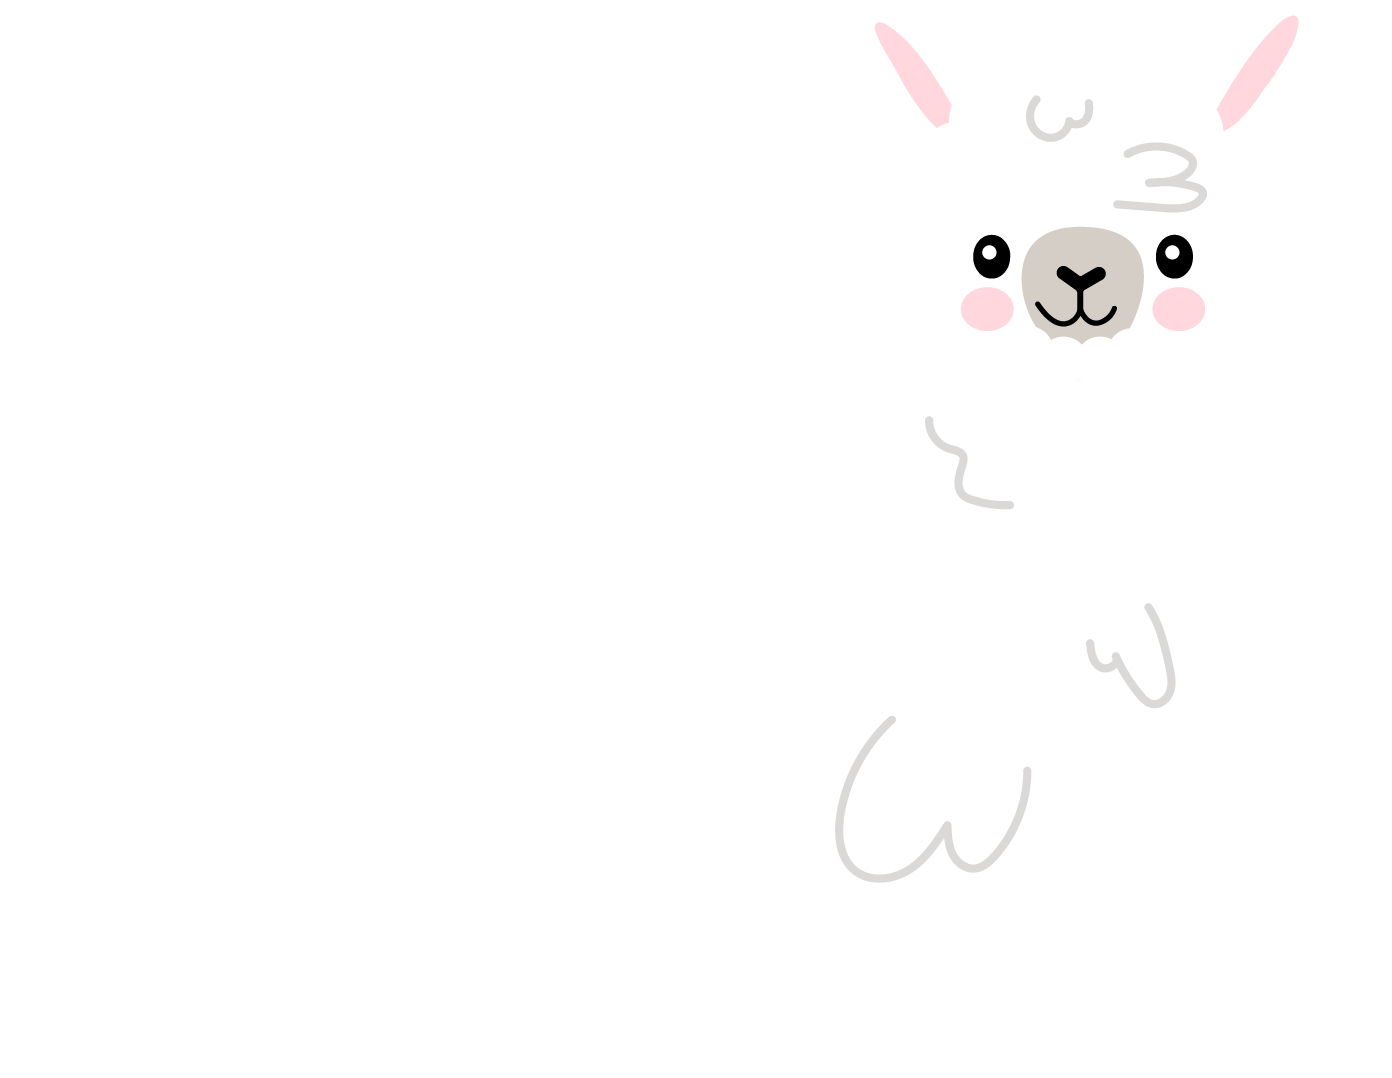 Juicy Lama